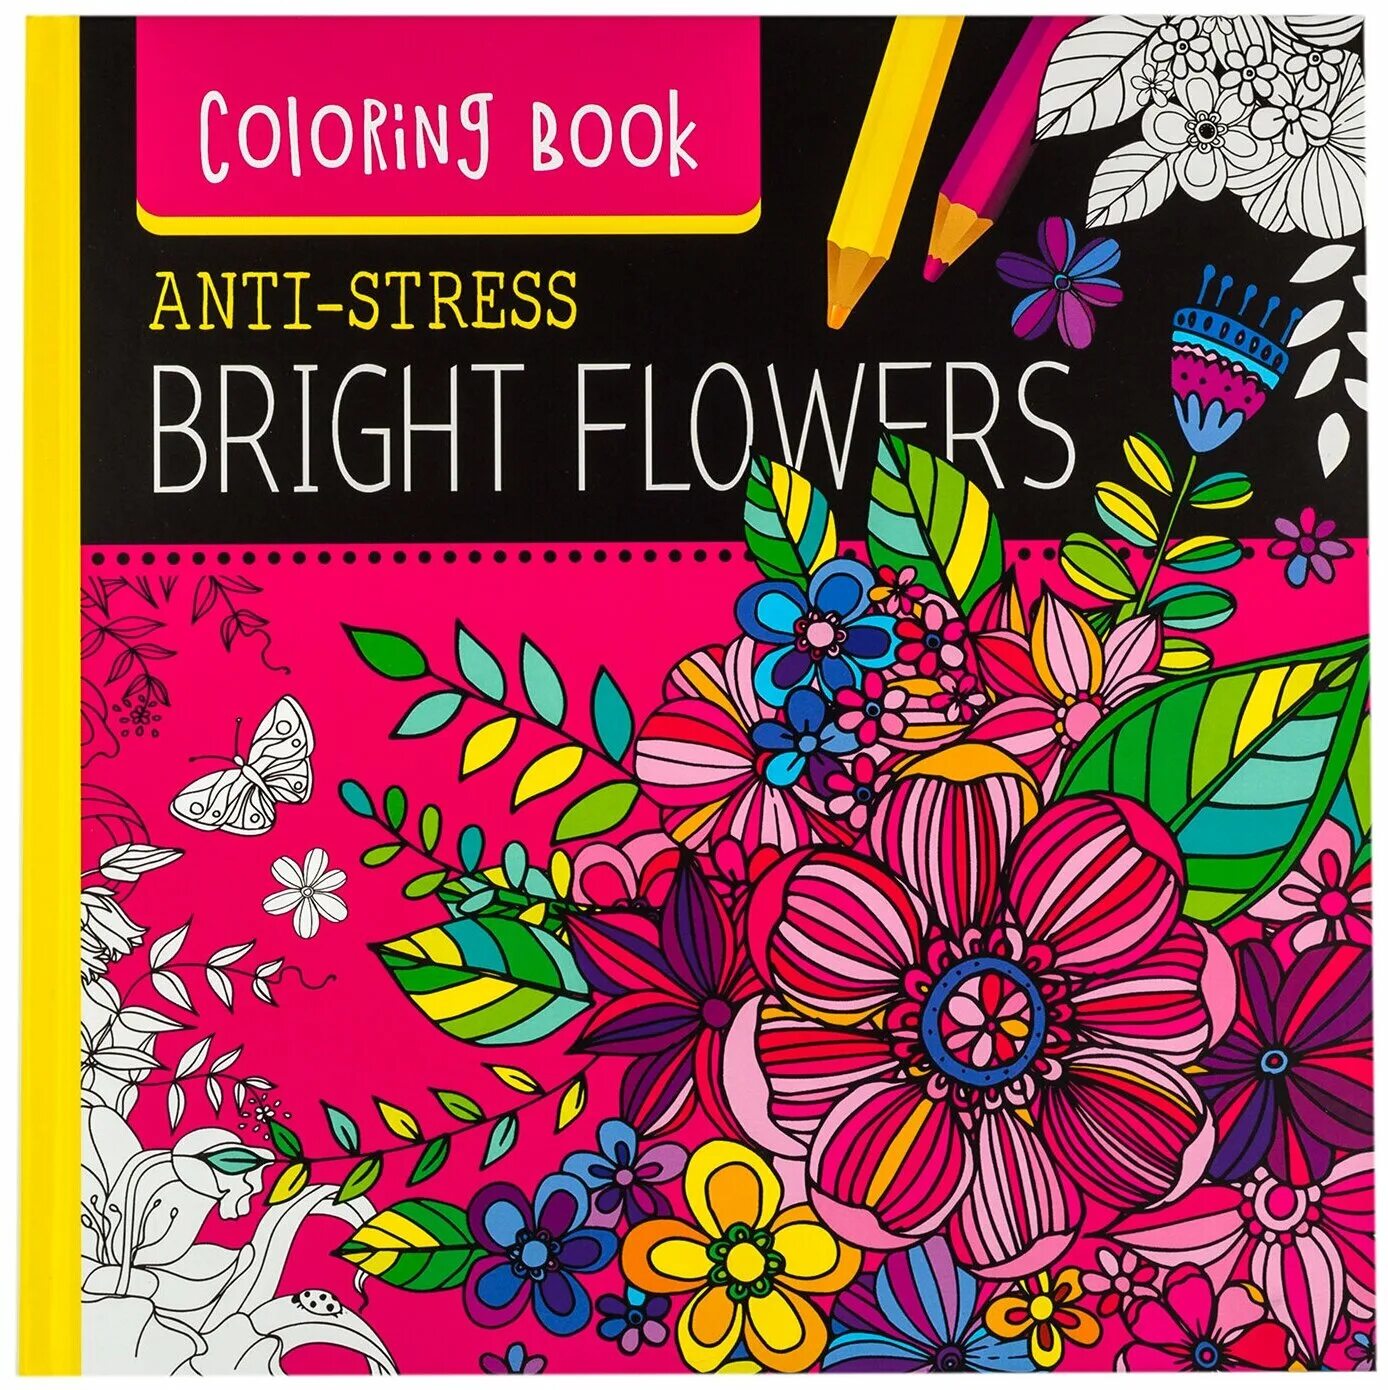 Amazing anti-stress coloring book